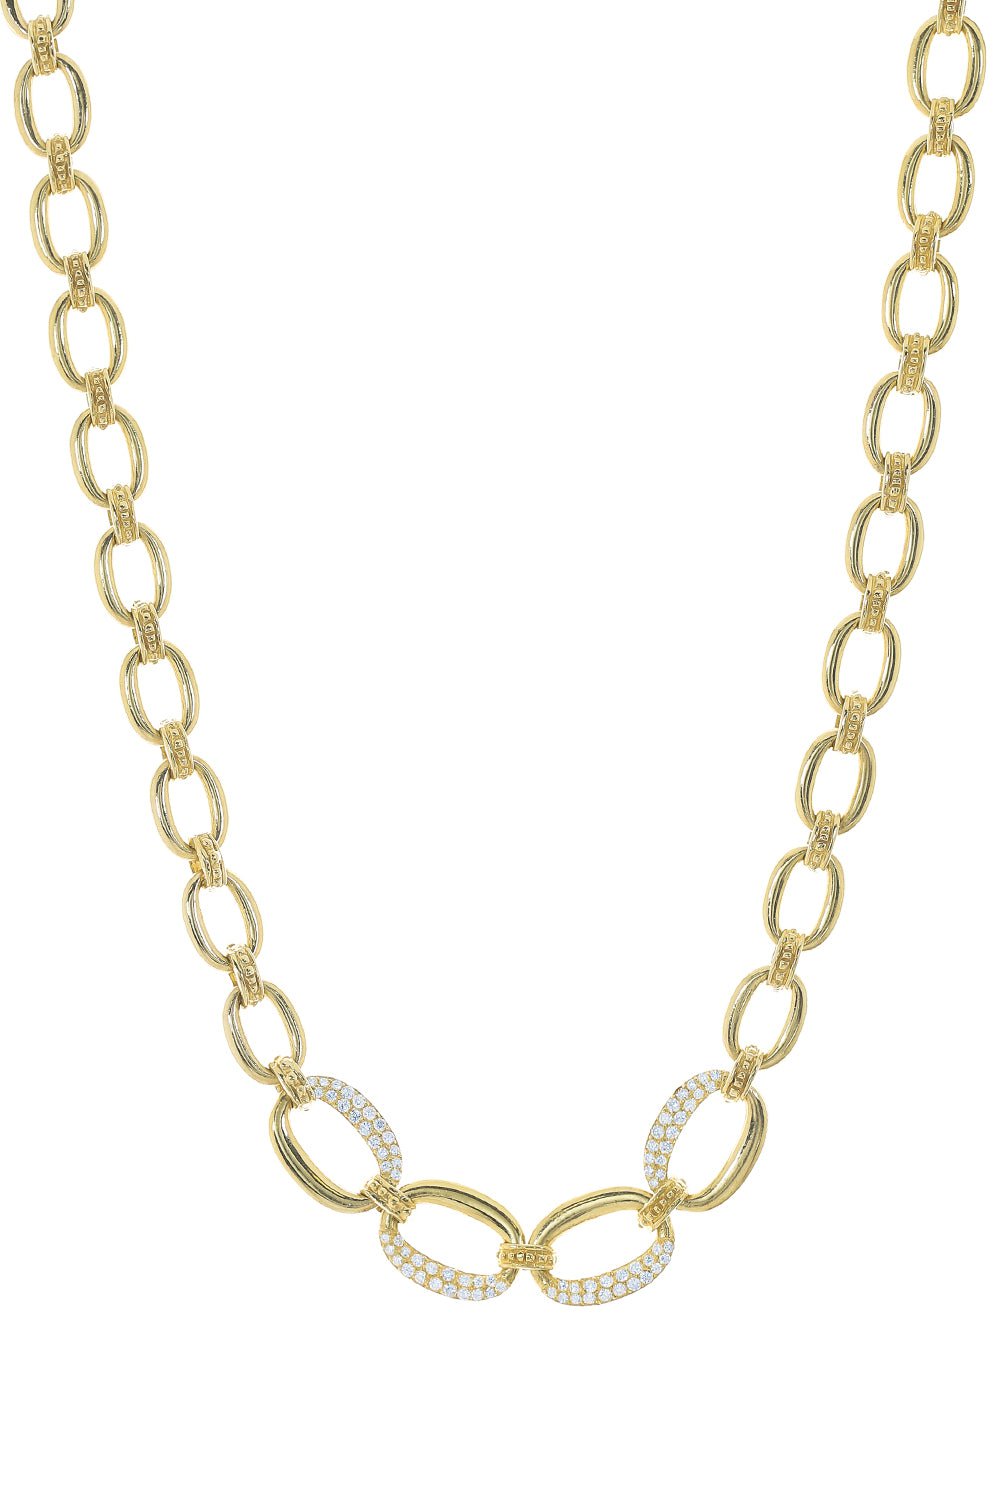 TANYA FARAH-Modern Etruscan Diamond Oval Link Necklace-YELLOW GOLD